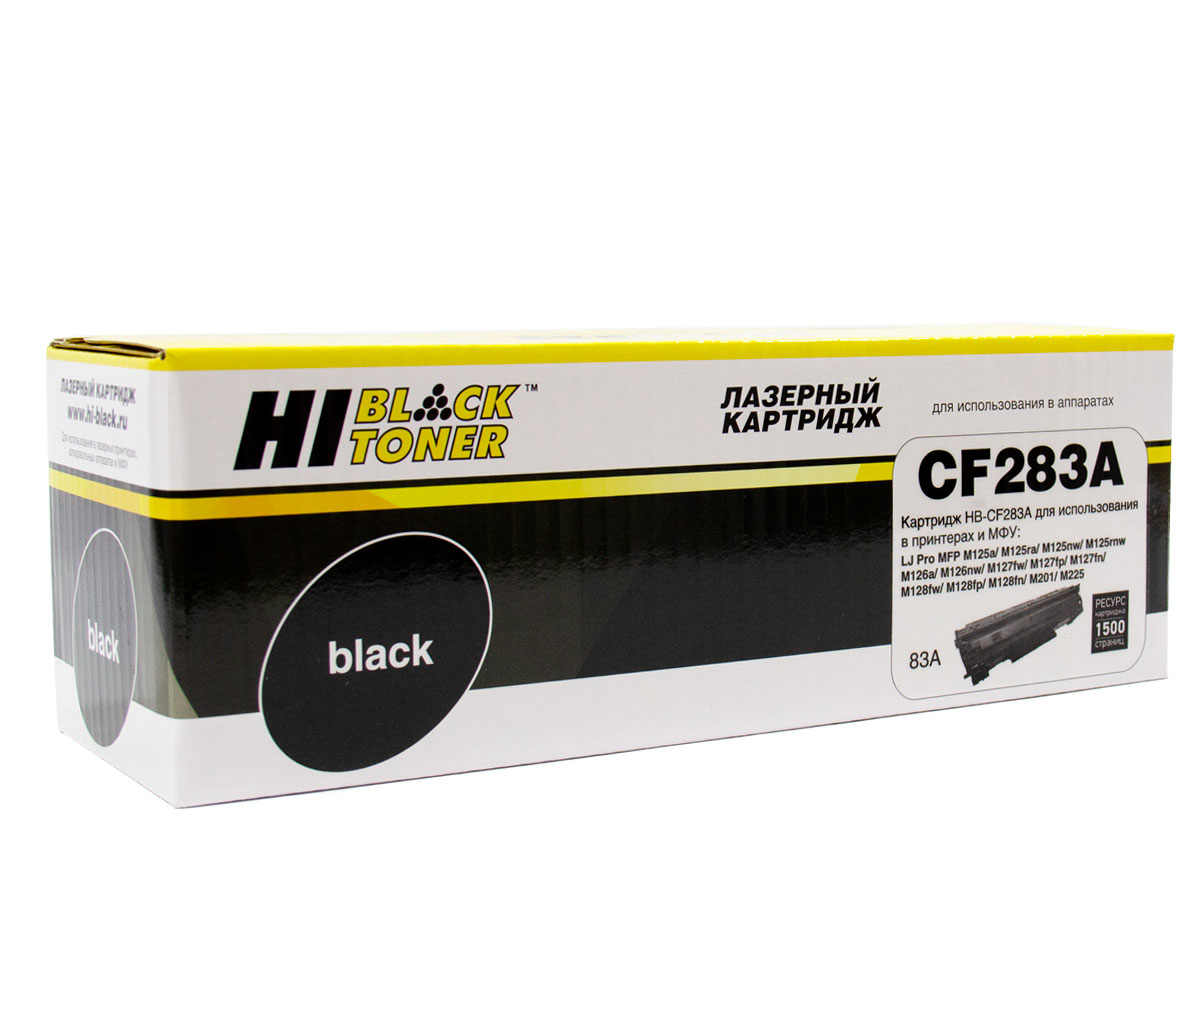 Картридж Hi-Black (HB - CF283A) для HP LJ Pro M125 / M126 / M127 / M201 / M225MFP, 1,5K